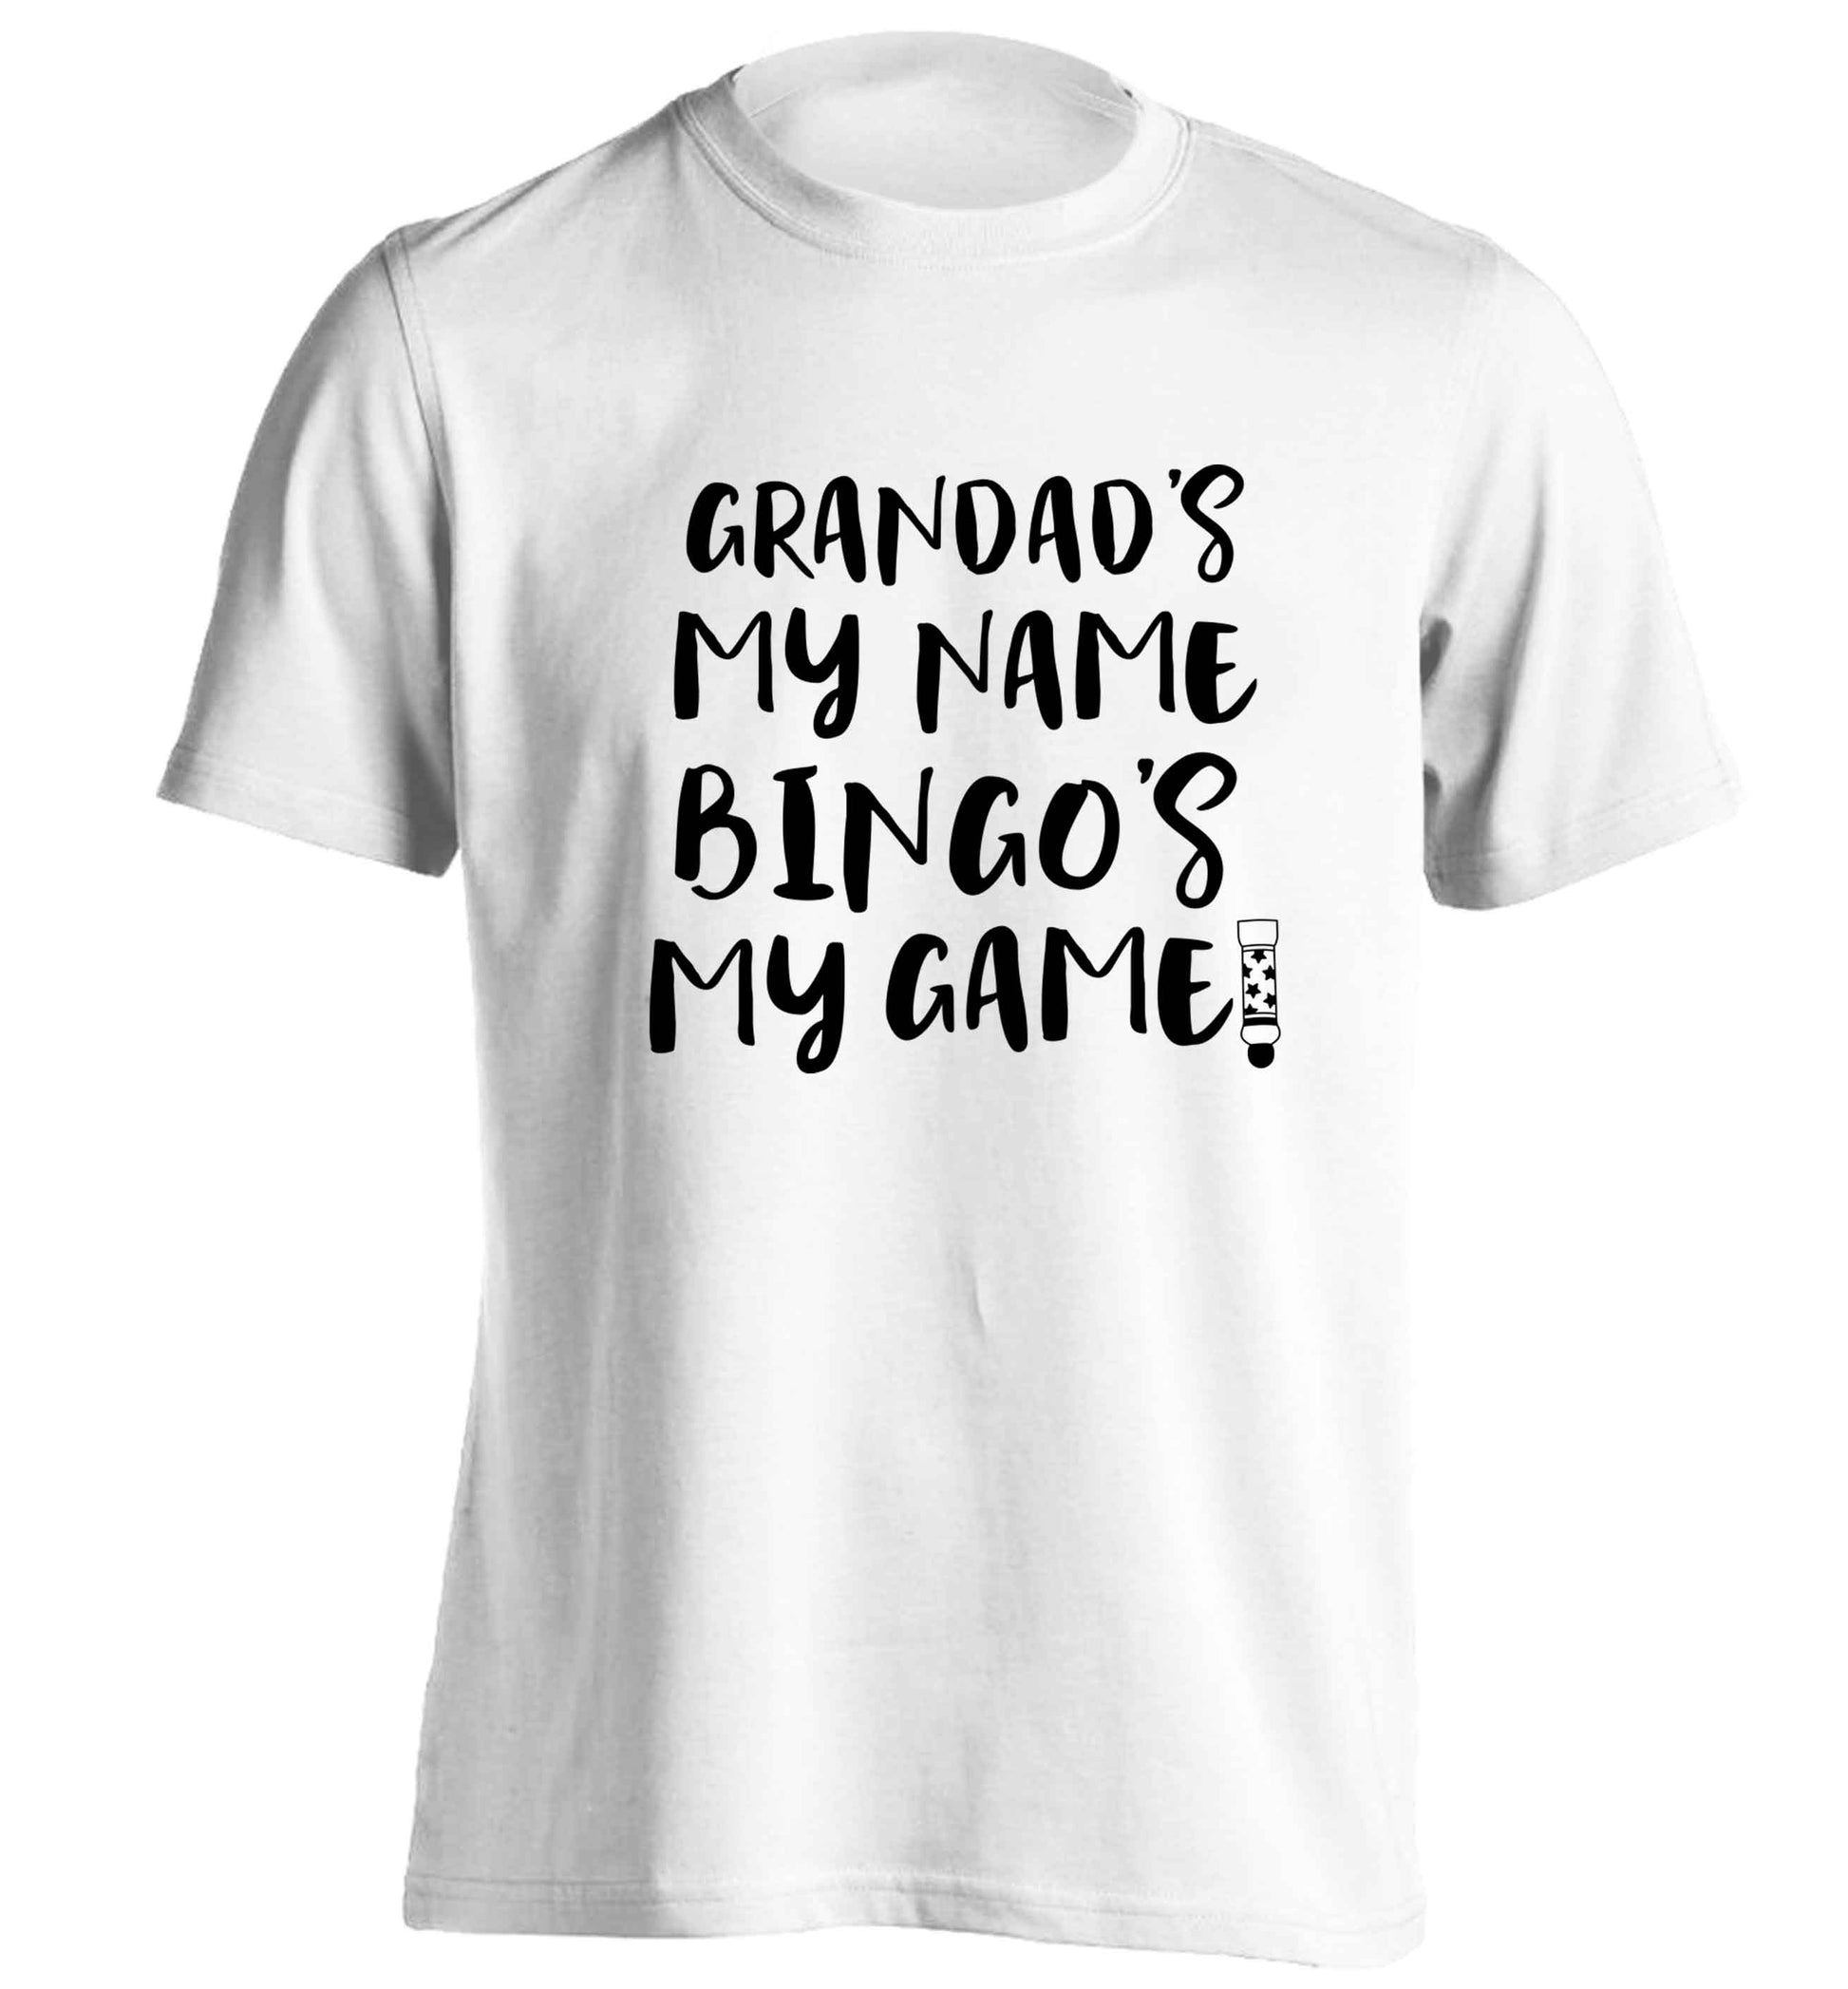 Grandad's my name bingo's my game! adults unisex white Tshirt 2XL